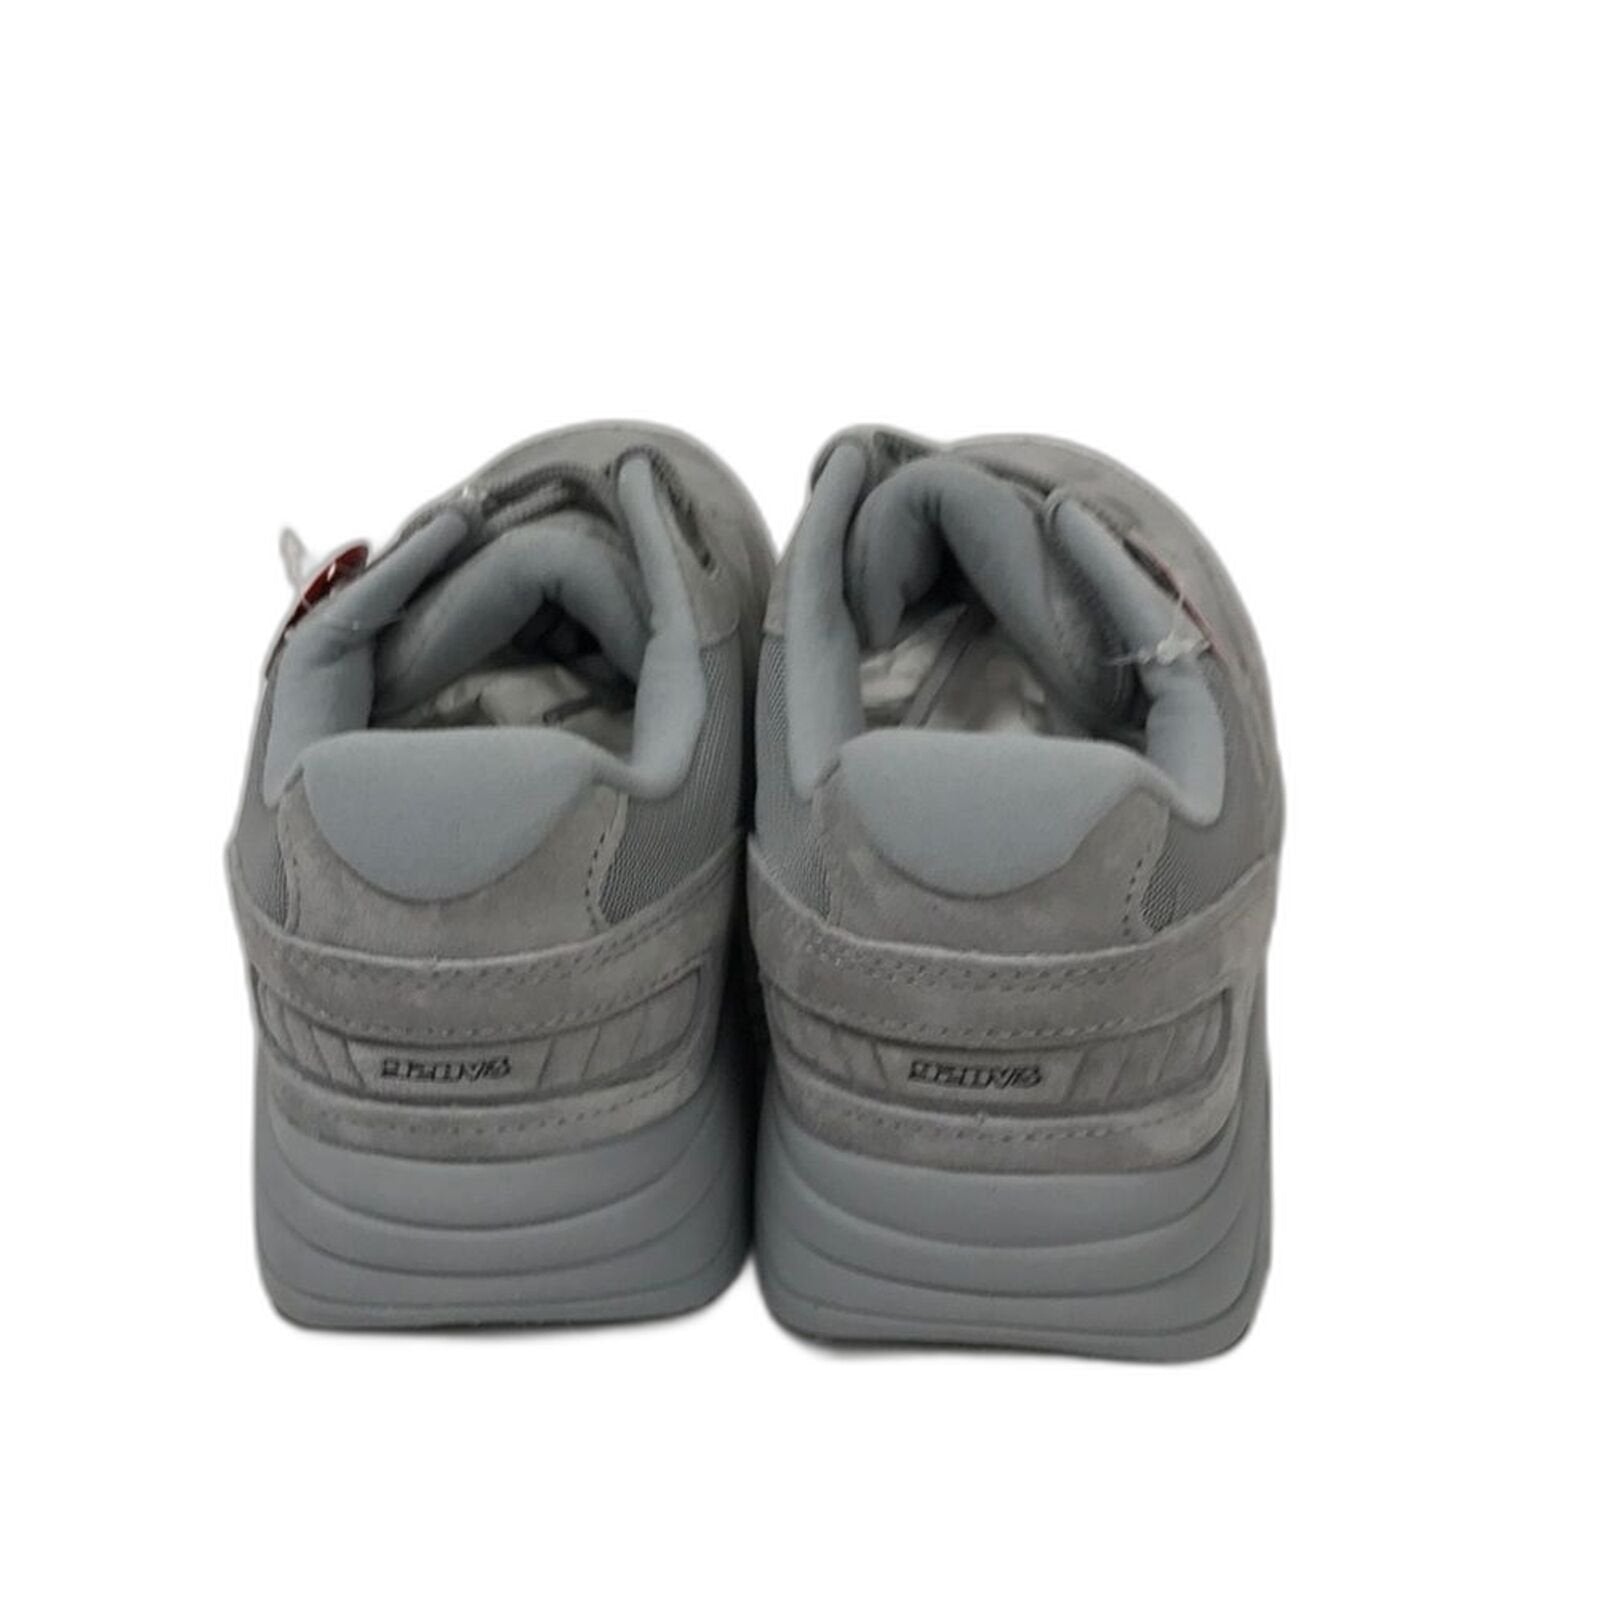 New Balance Mens 928 V3 Lace-up Walking Shoe Grey 7.5